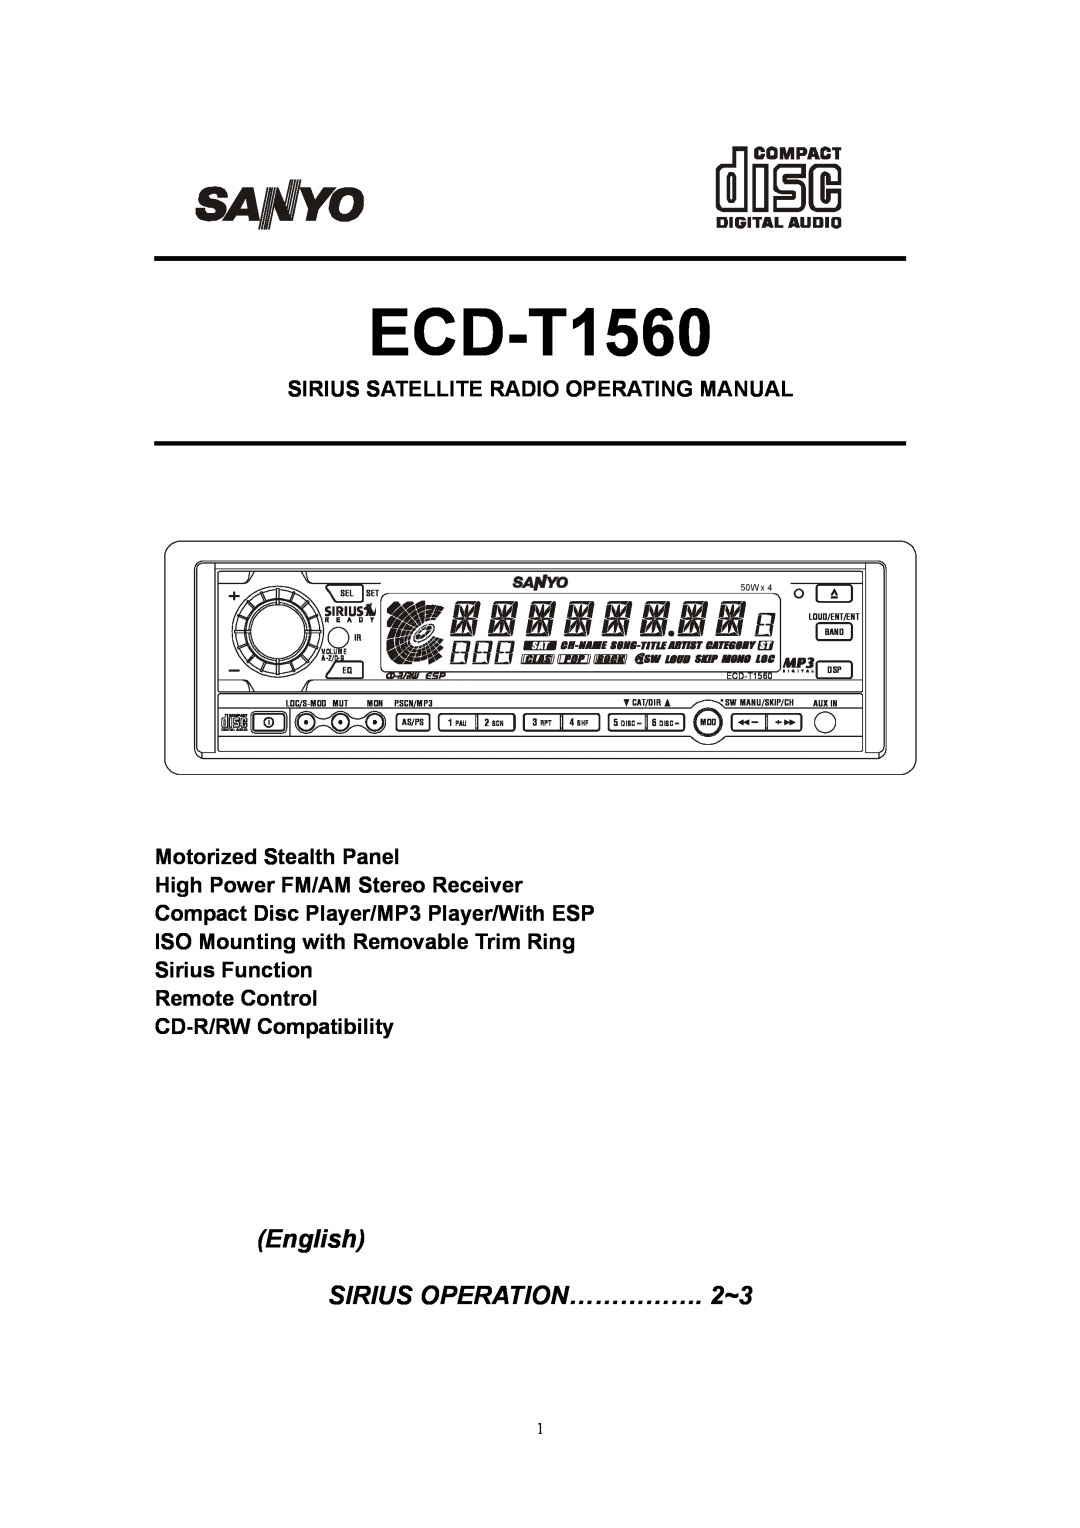 Sanyo ECD-T1560 manual English SIRIUS OPERATION……………. 2~3 